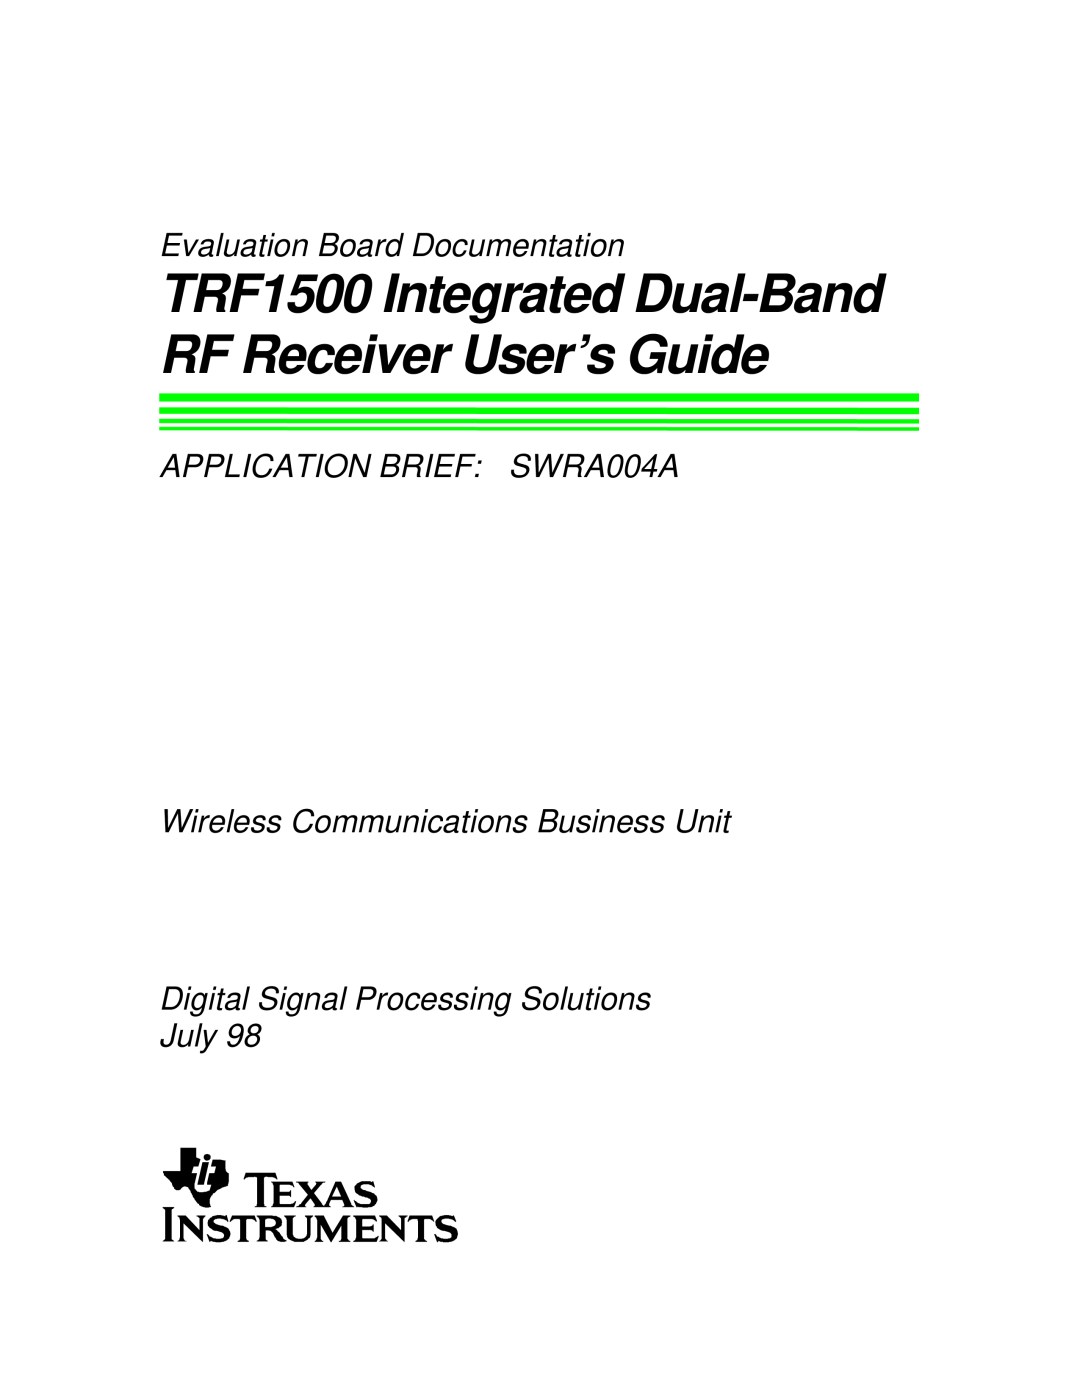 Texas Instruments TRF1500 manual Evaluation Board Documentation, APPLICATION BRIEF SWRA004A 